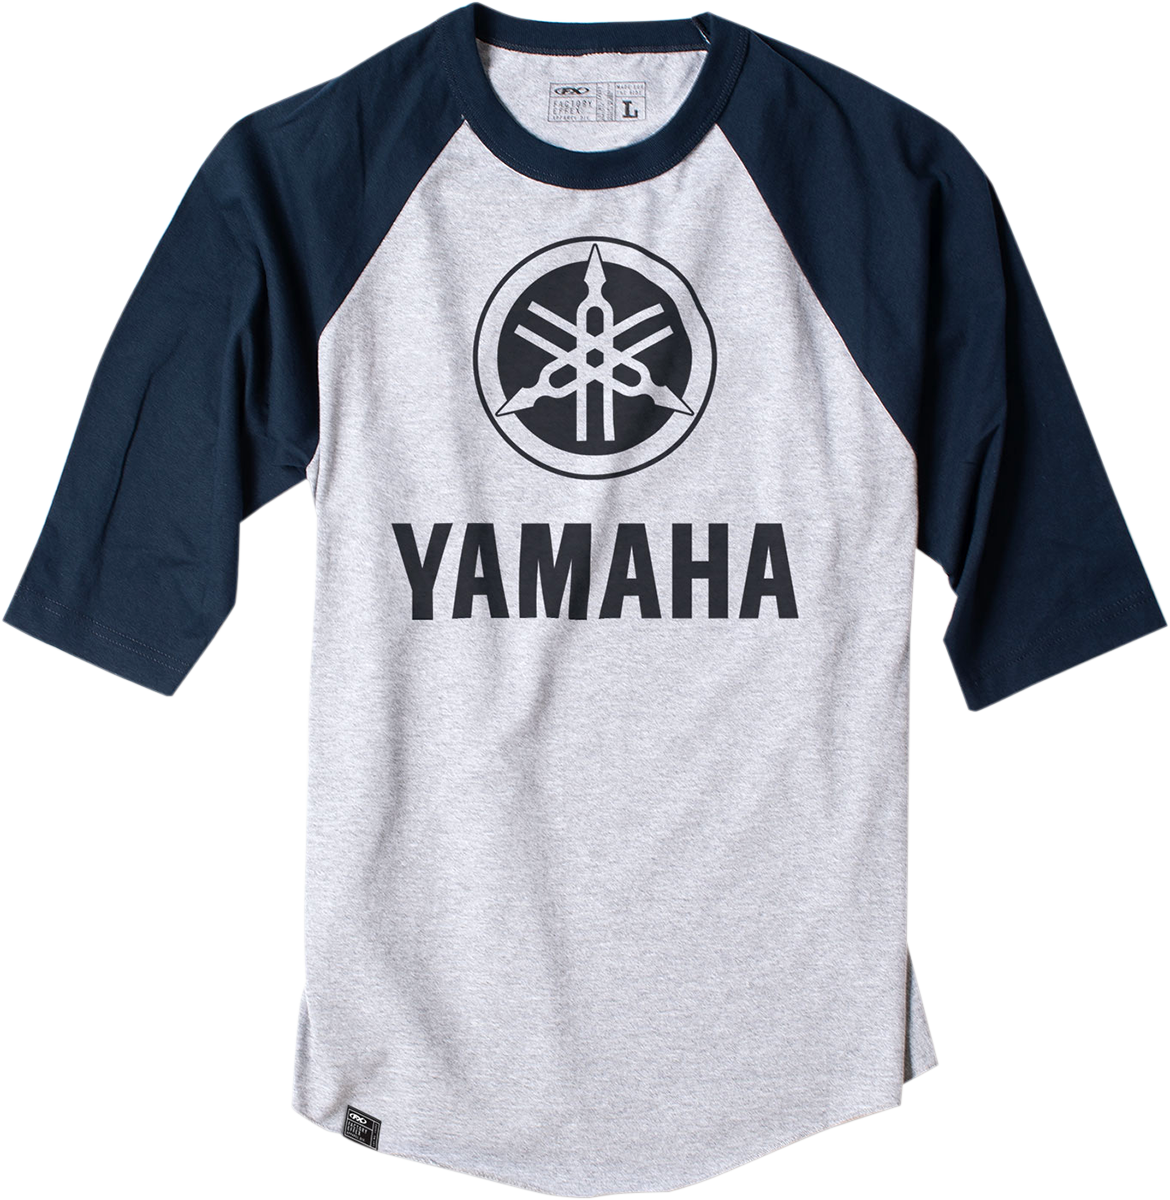 FACTORY EFFEX Yamaha Baseball T-Shirt - Grey/Blue - 2XL 17-87228